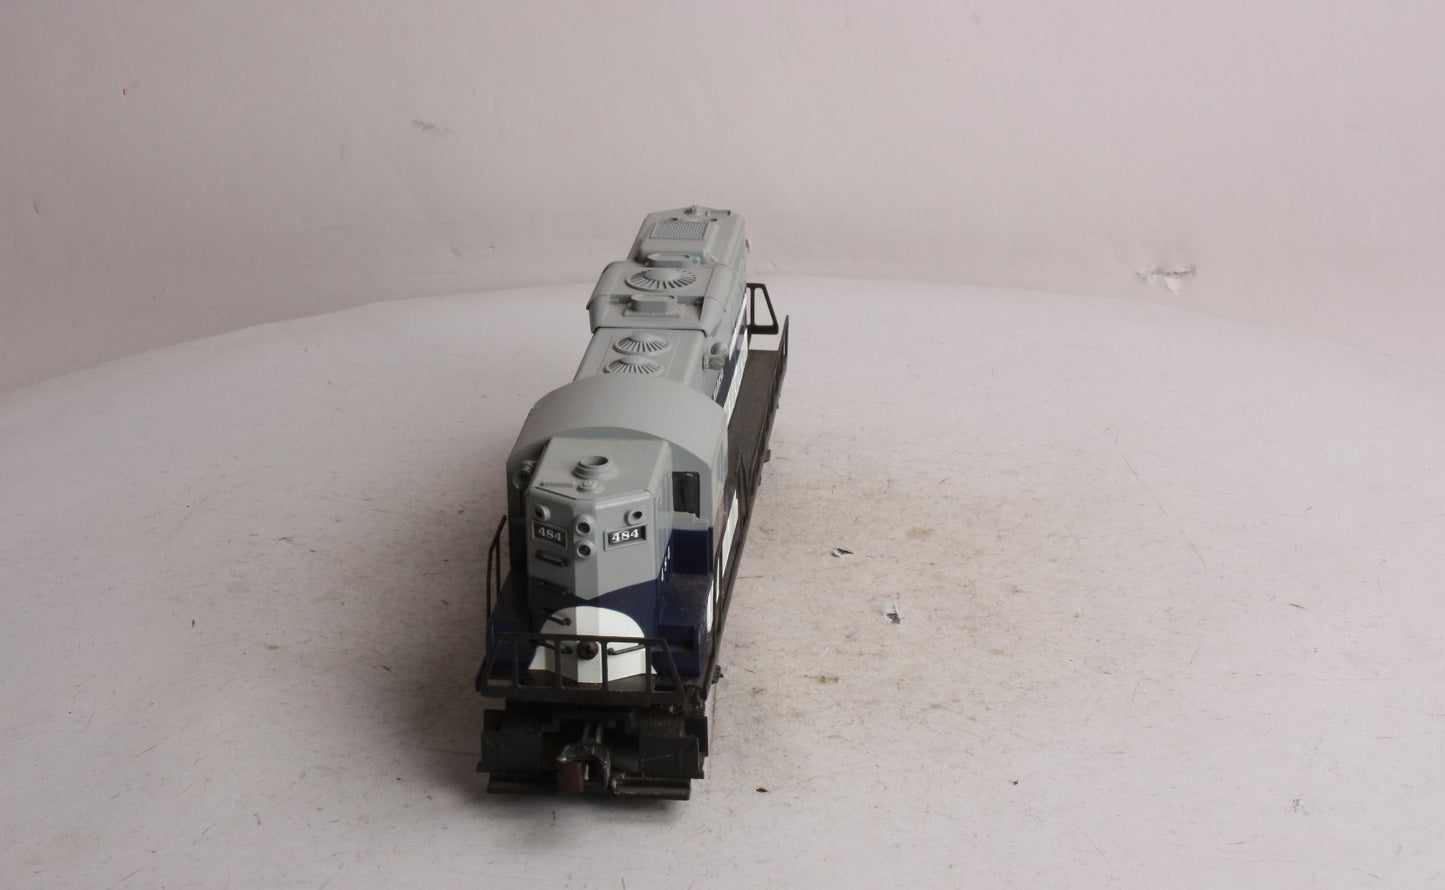 Lionel 6-38895 Wabash Legacy Scale GP9 Diesel Locomotive #484